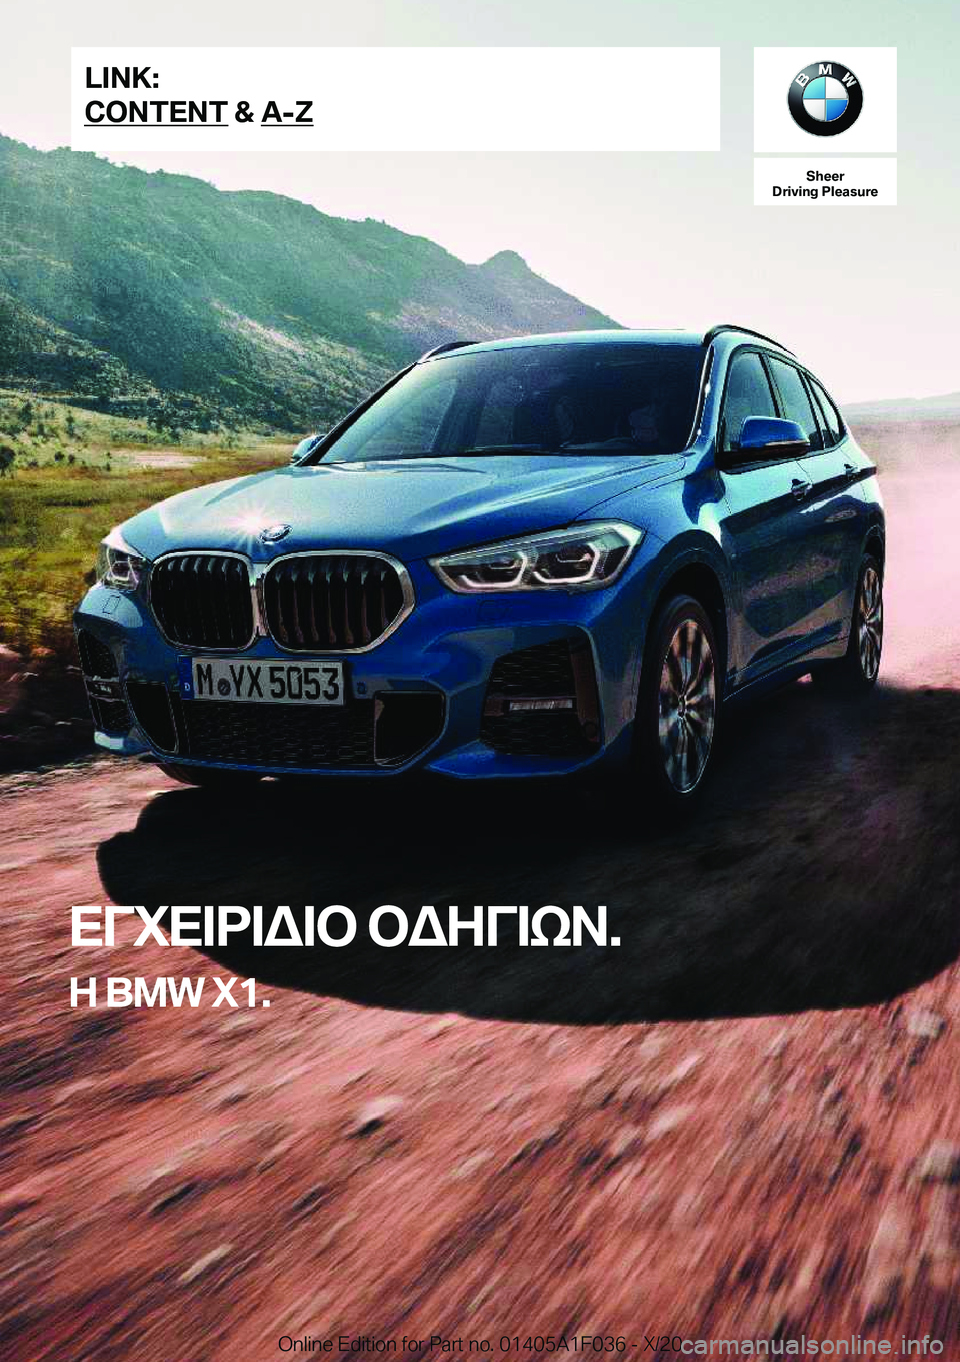 BMW X1 2021  ΟΔΗΓΌΣ ΧΡΉΣΗΣ (in Greek) �S�h�e�e�r
�D�r�i�v�i�n�g��P�l�e�a�s�u�r�e
XViX=d=W=b�bWZV=kA�.
Z��B�M�W��X�1�.�L�I�N�K�:
�C�O�N�T�E�N�T��&��A�-�Z�O�n�l�i�n�e��E�d�i�t�i�o�n��f�o�r��P�a�r�t��n�o�.��0�1�4